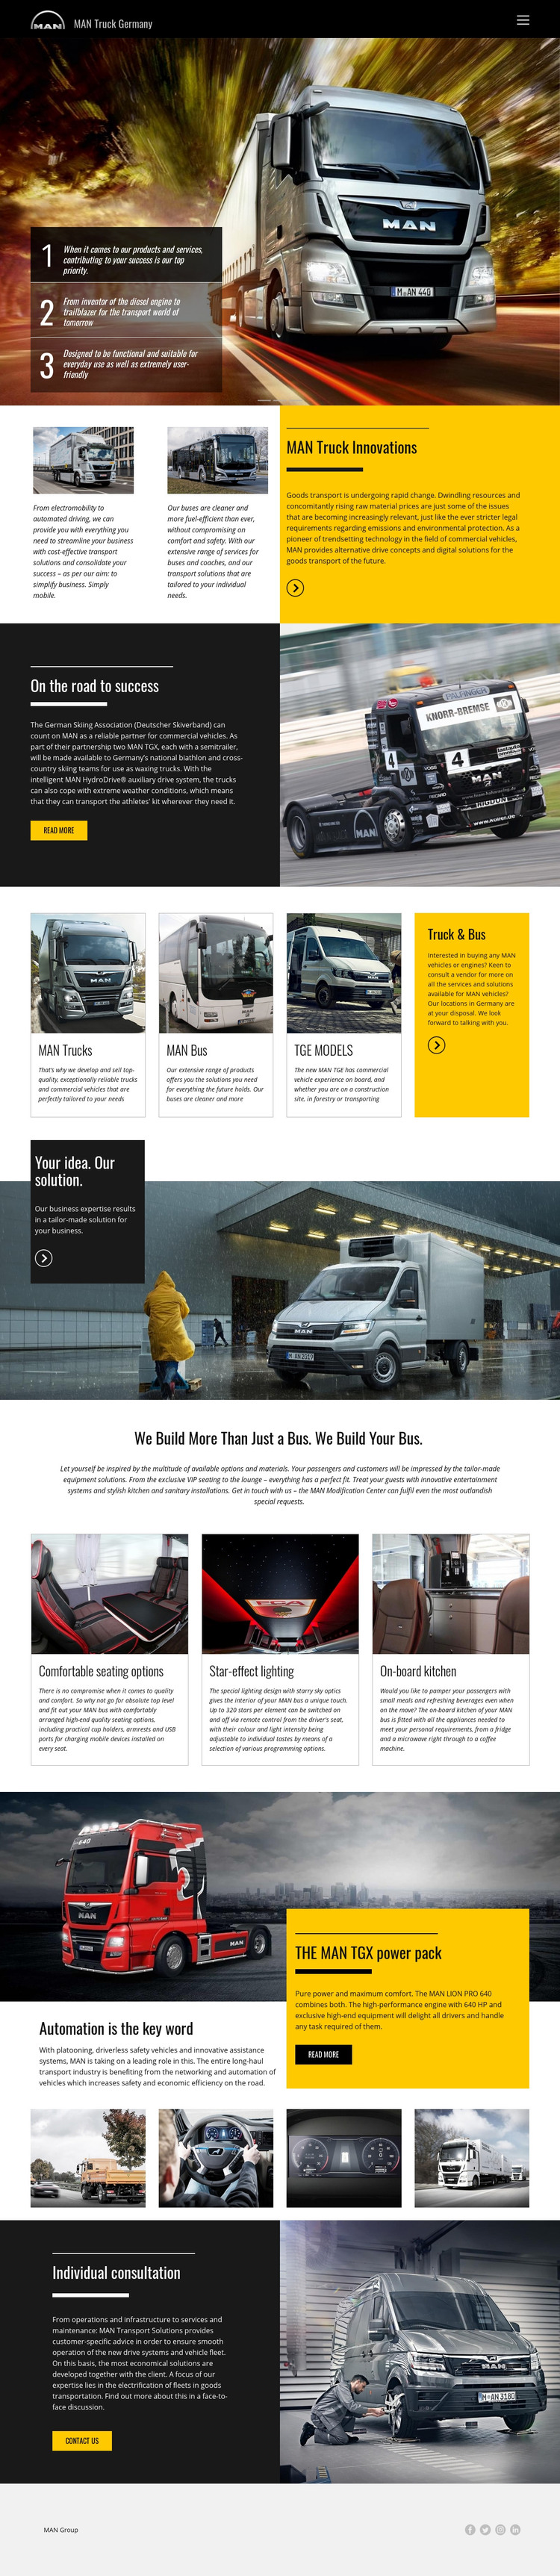 Man trucks for transportation Homepage Design